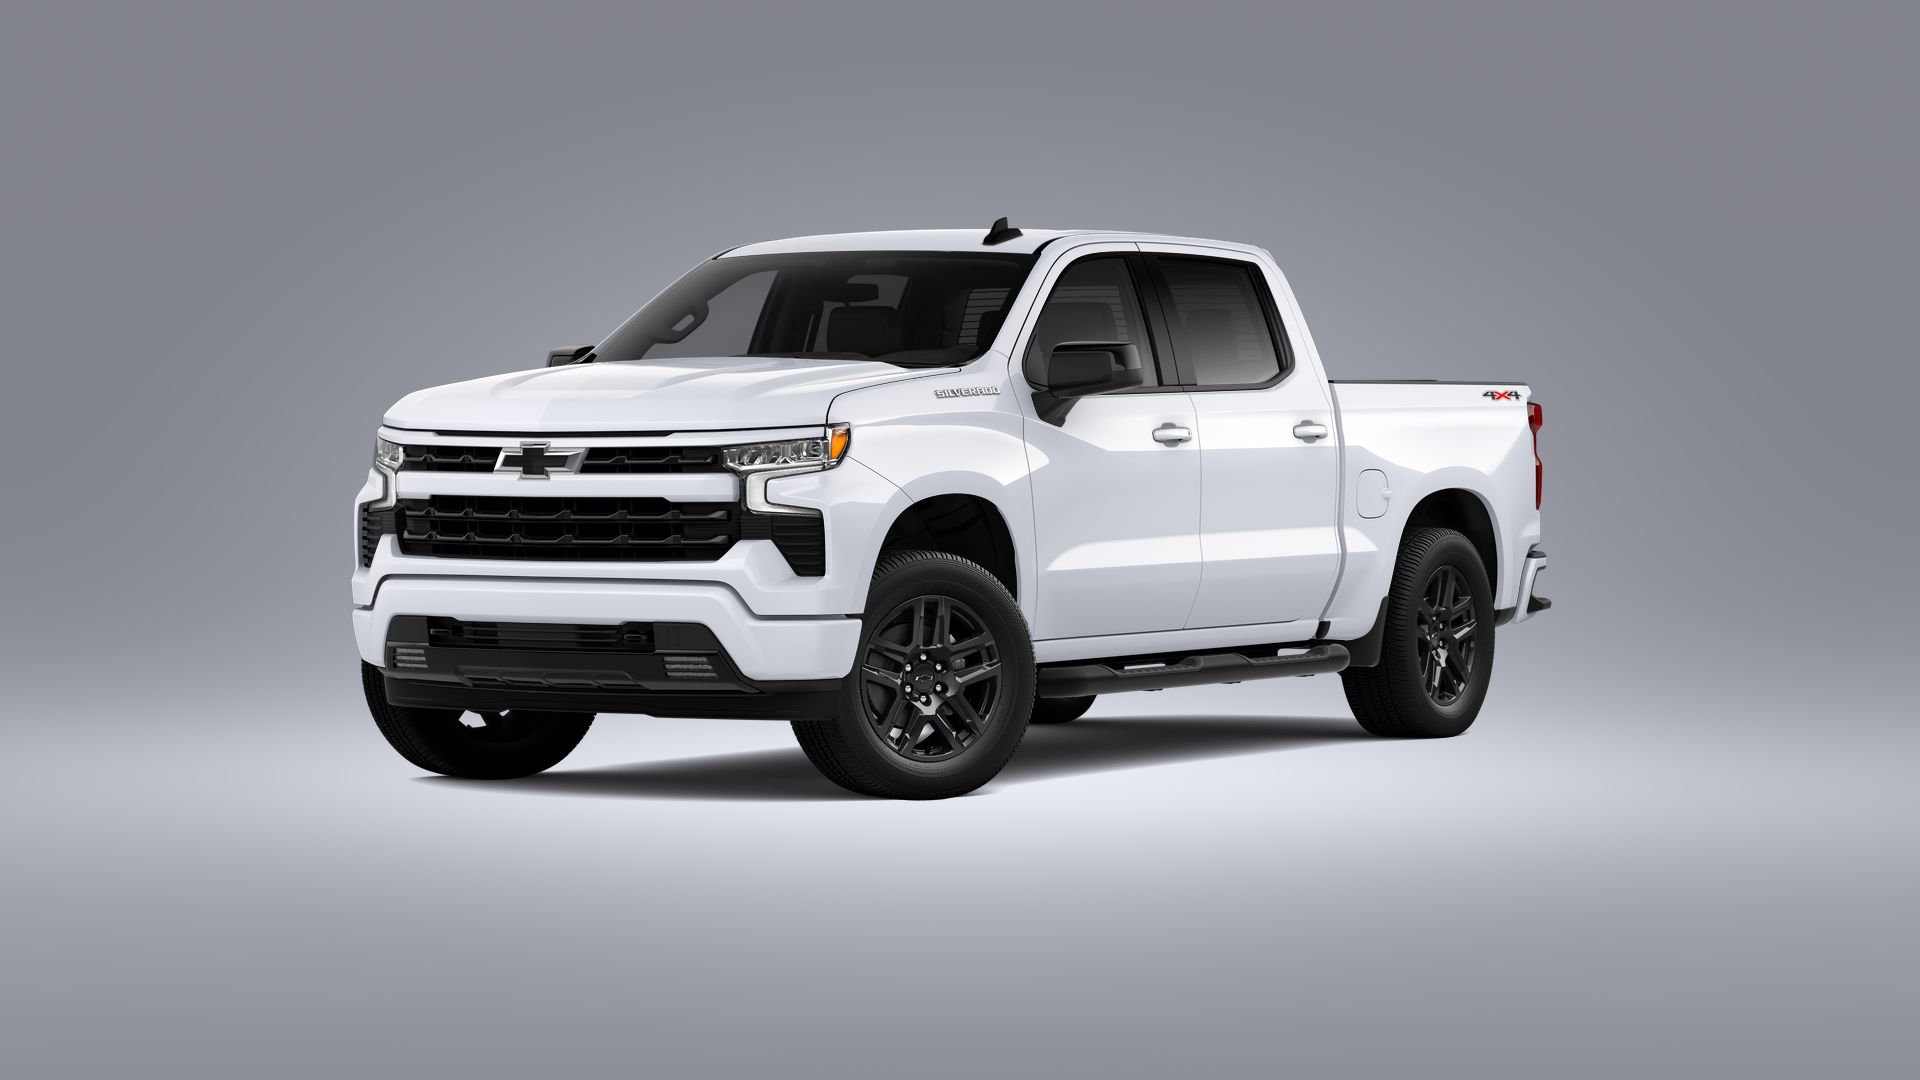 2023 Chevrolet Silverado 1500 White | New Truck for Sale New Orleans |  SKU237004